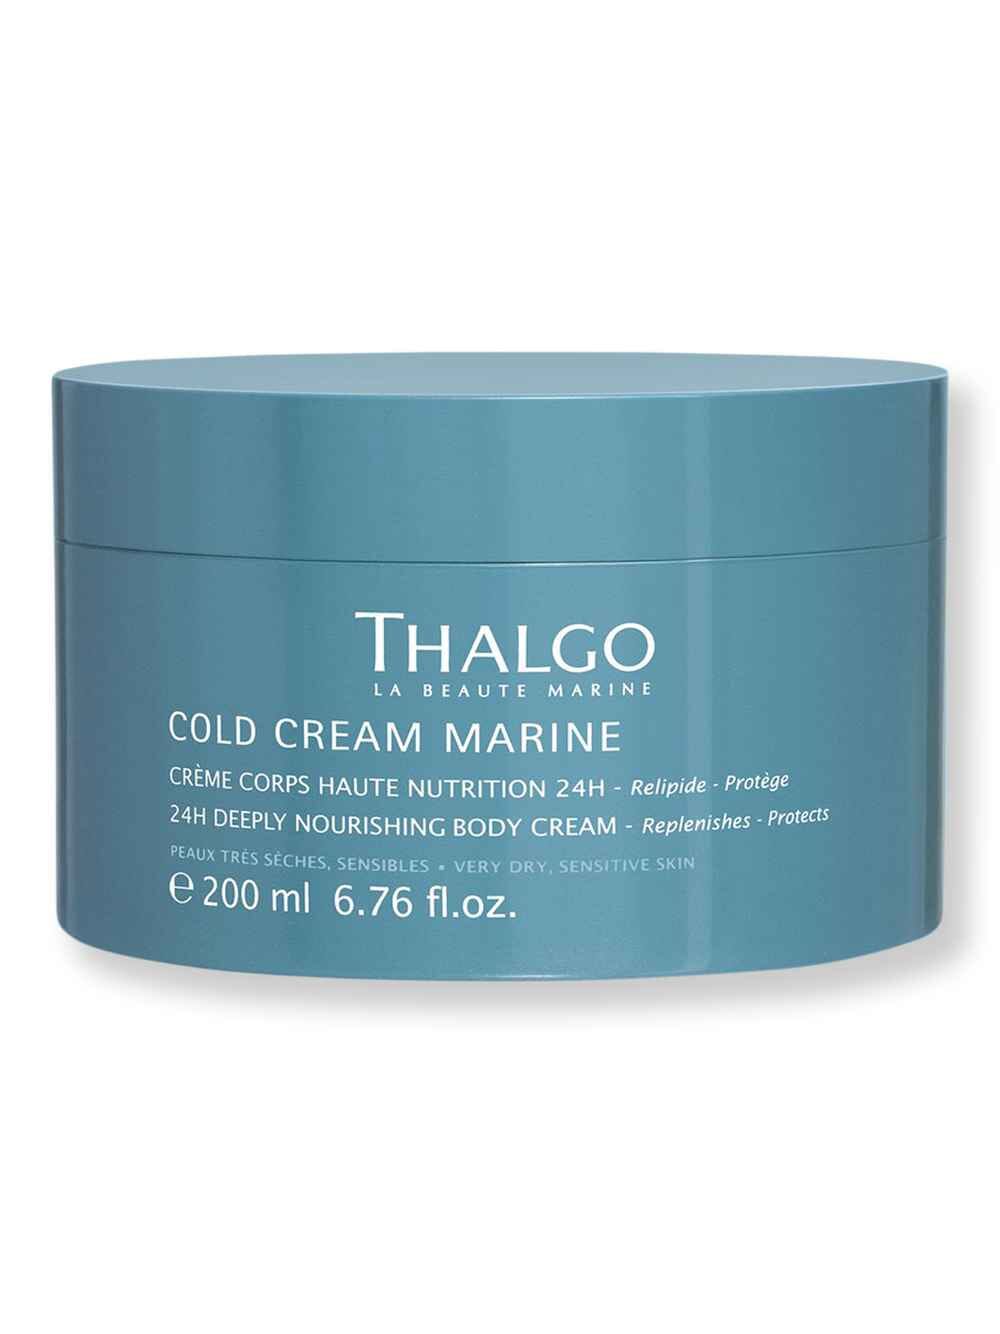 Thalgo Thalgo 24H Deeply Nourishing Body Cream 200 ml Body Lotions & Oils 